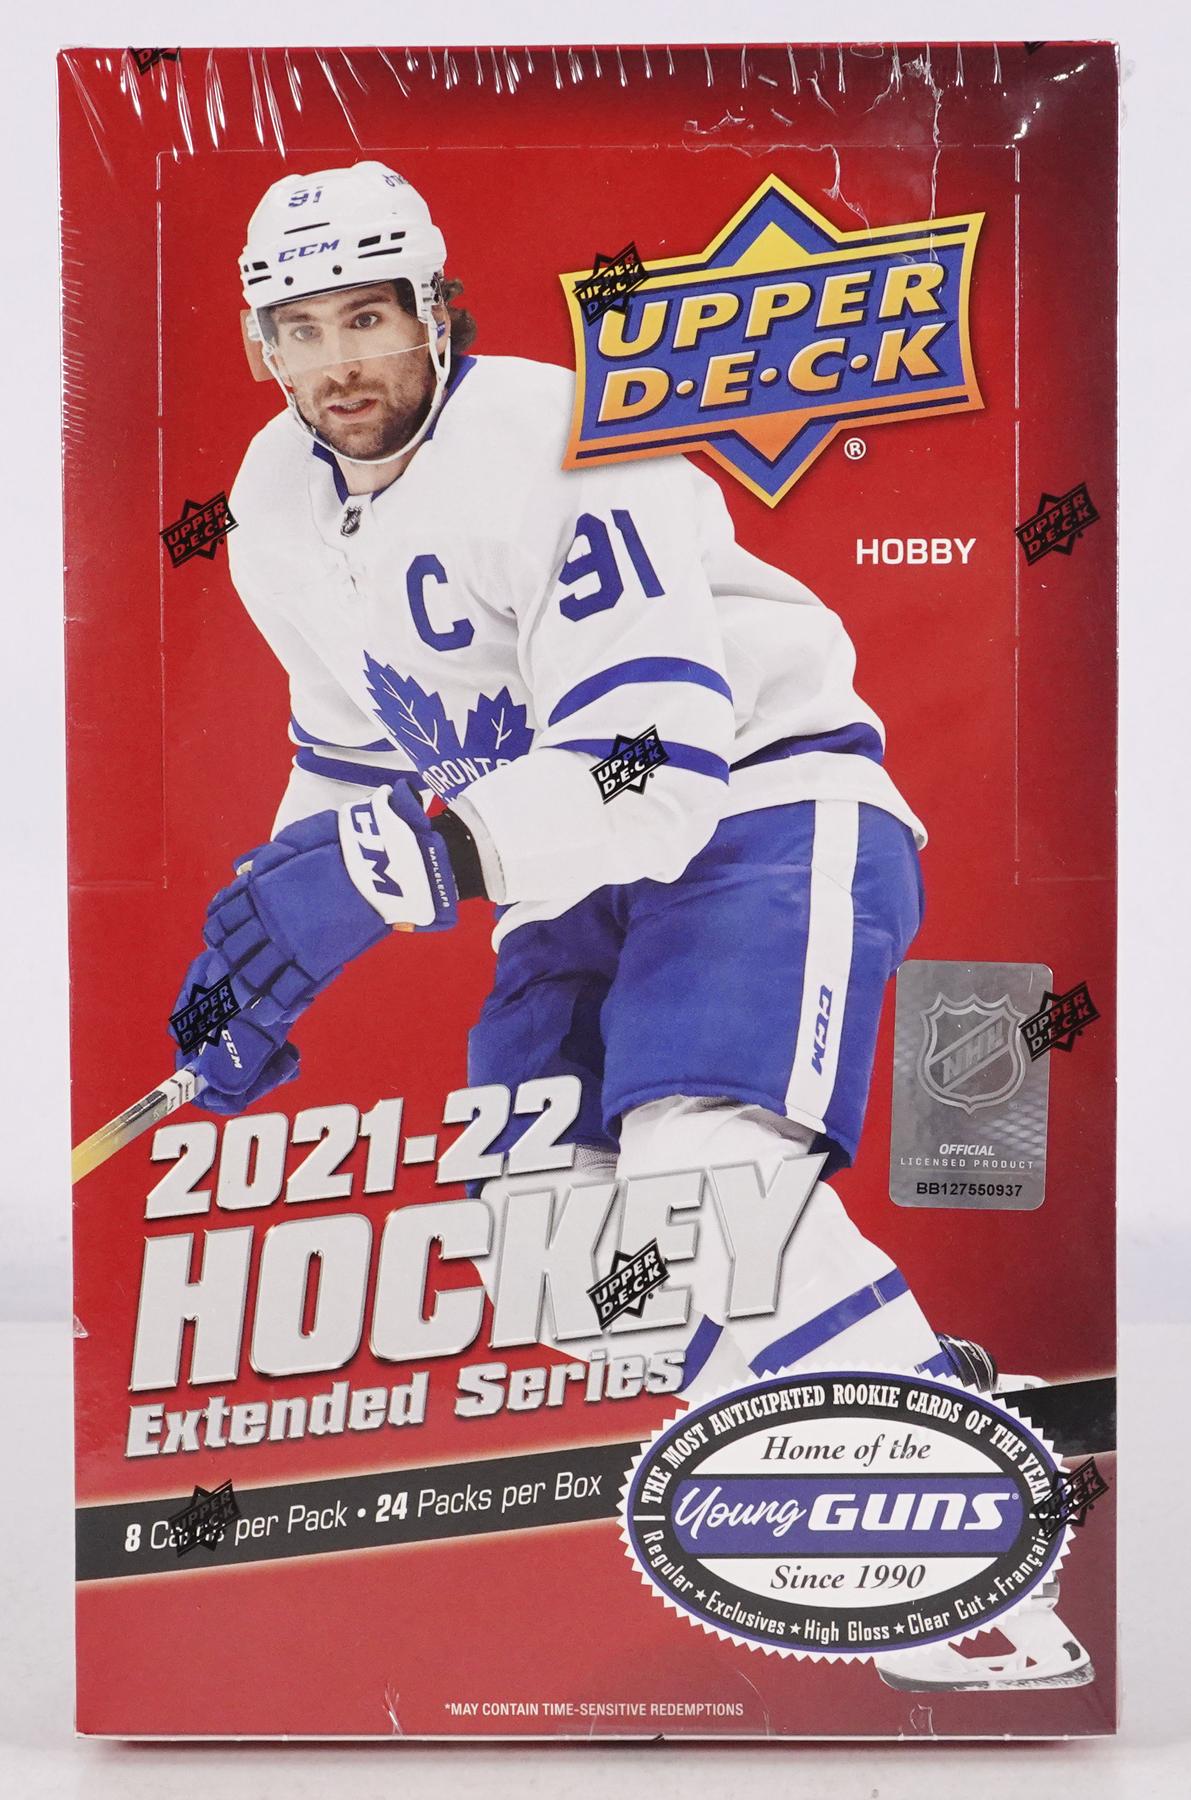 2020/21 Upper Deck Extended Series Hockey Hobby Box 24 Packs Per Box 8 Cards Per Pack 